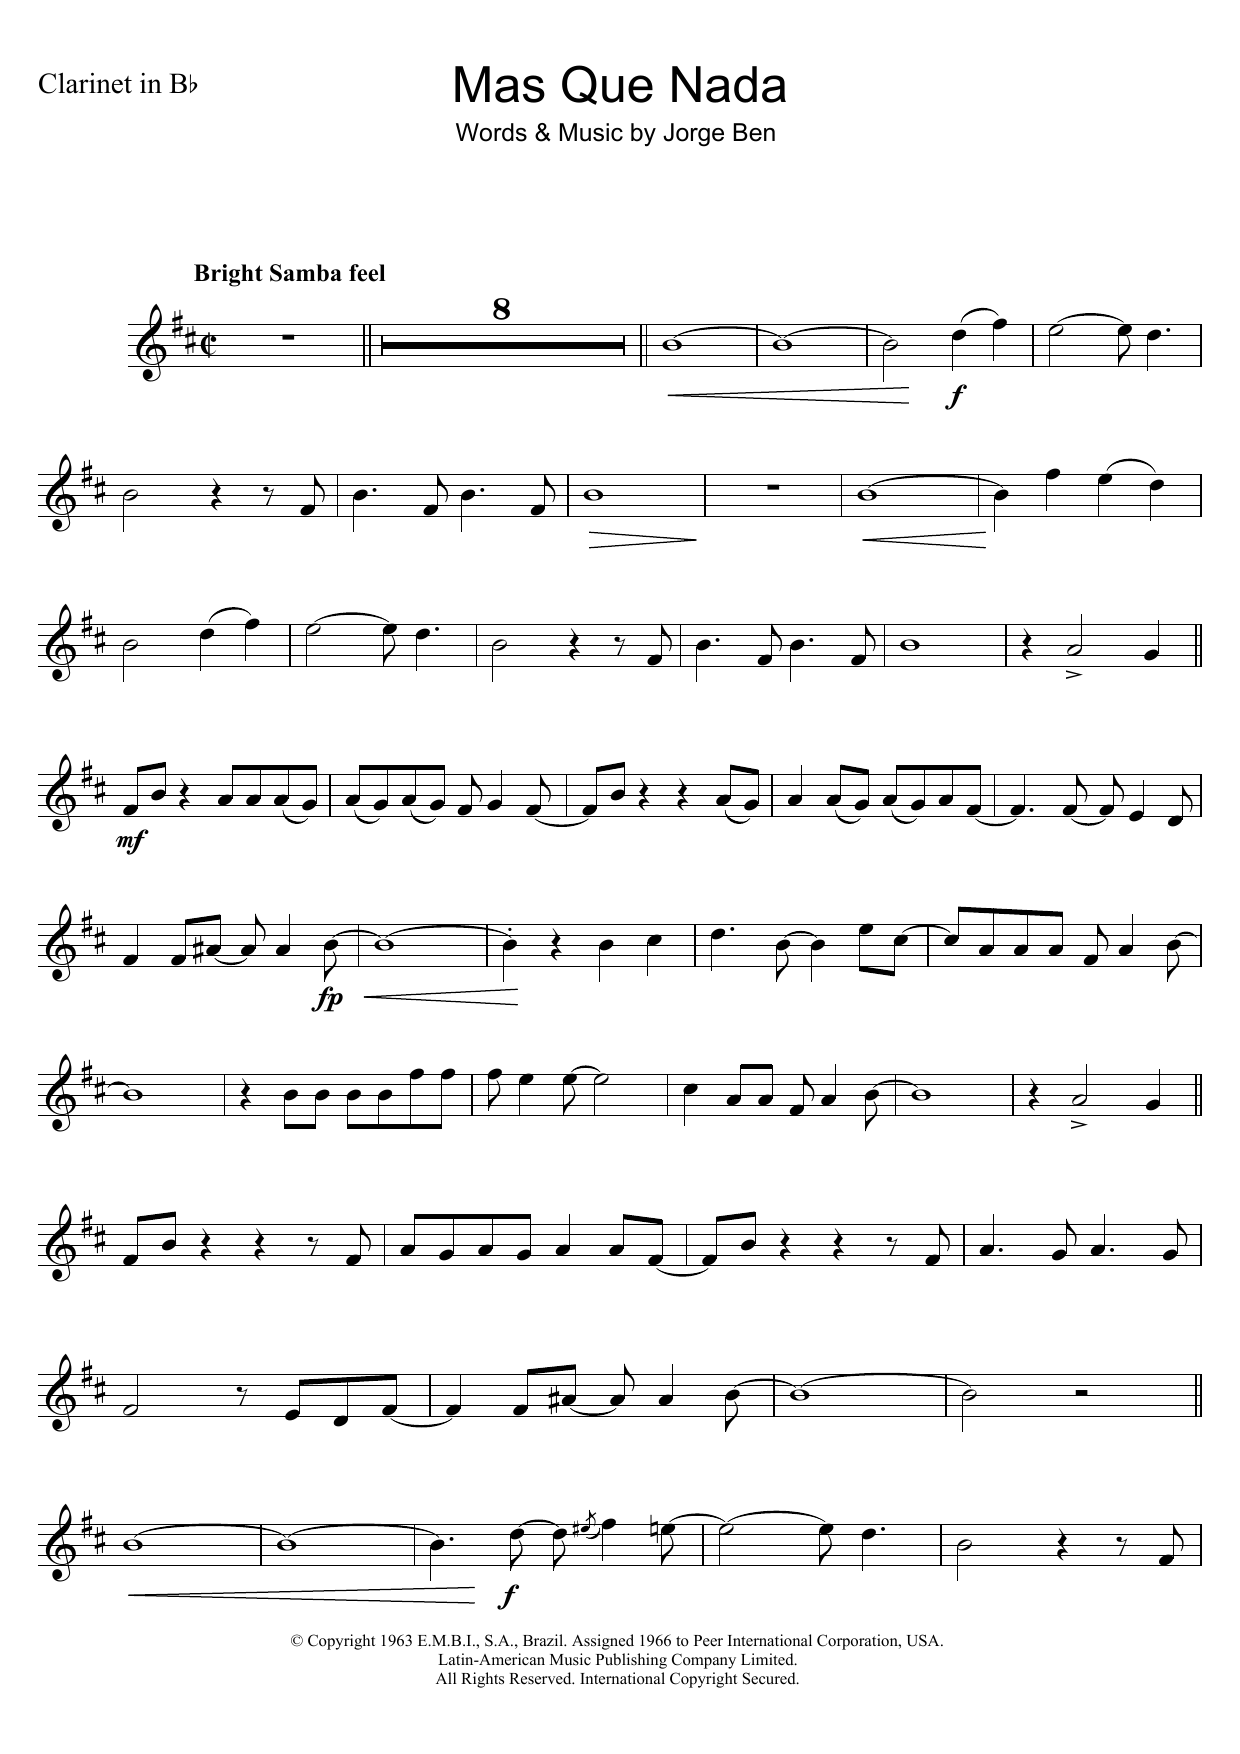 Jorge Ben Mas Que Nada (Say No More) Sheet Music Notes & Chords for Clarinet - Download or Print PDF